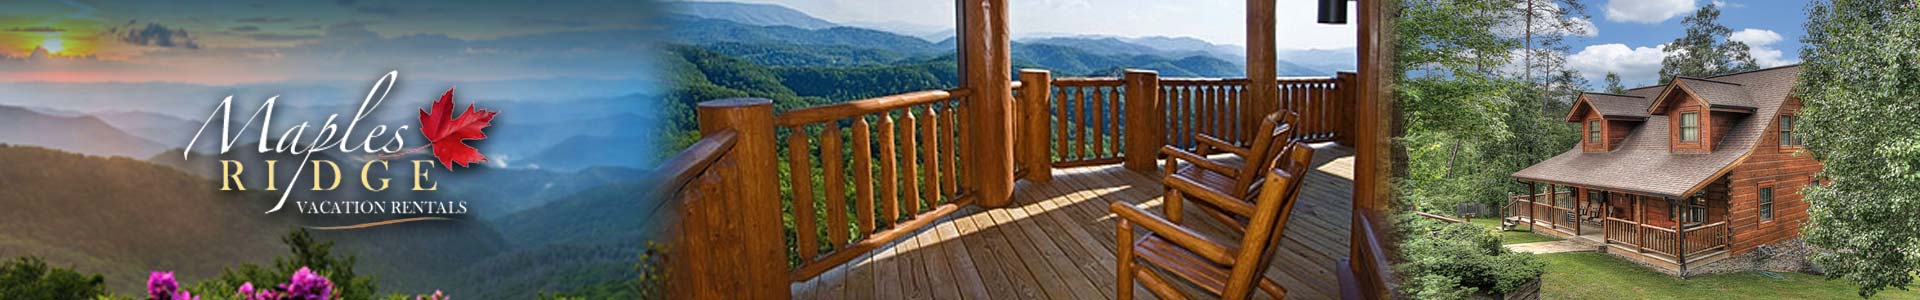 Ad - Maples Ridge Vacation Rentals: Click to visit website.